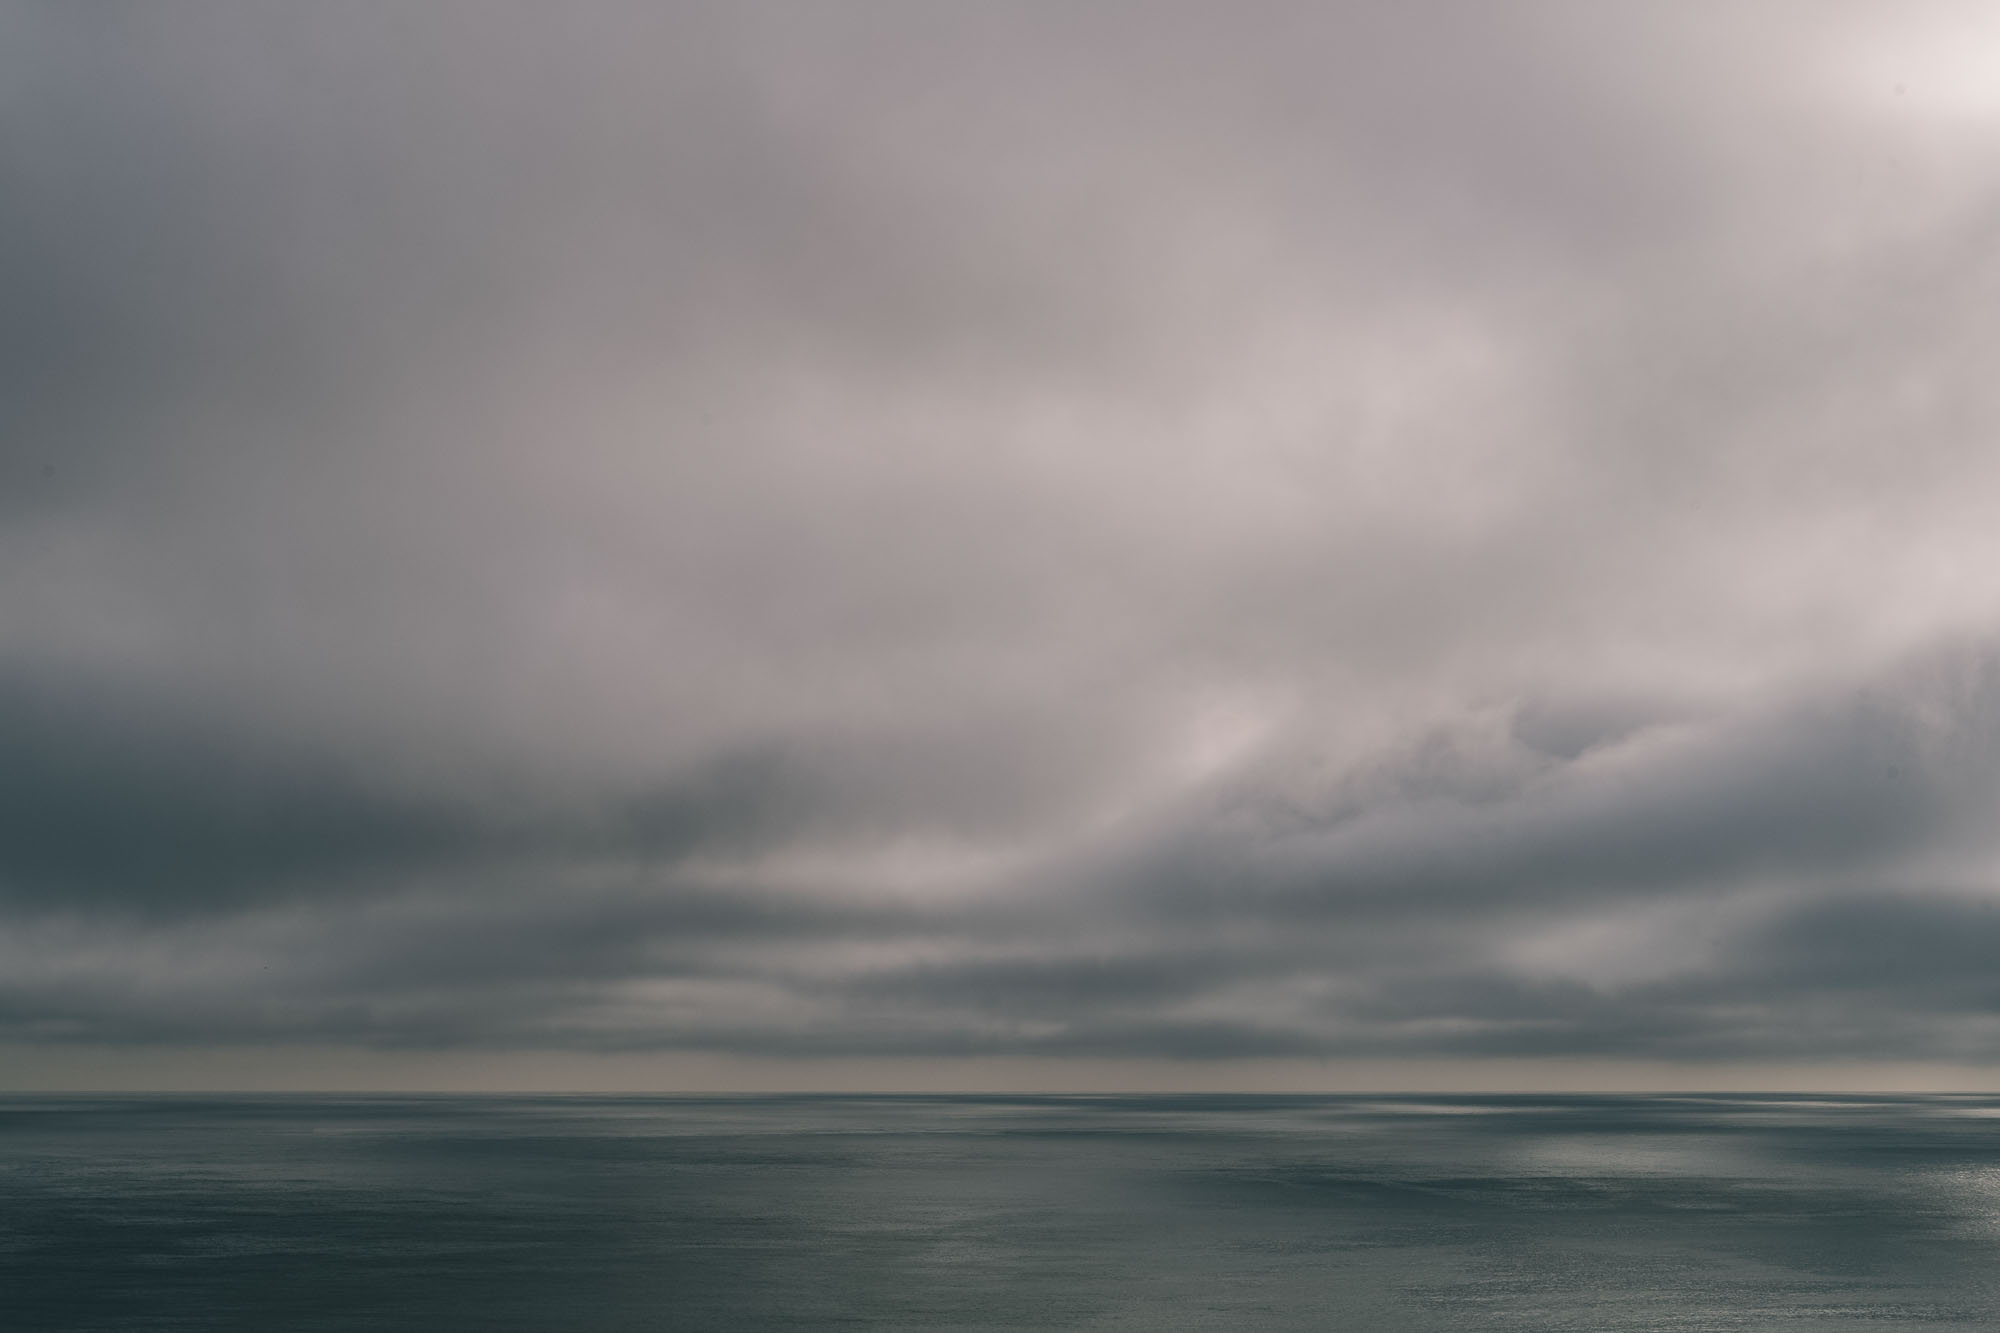 emotional looking seascape in greys